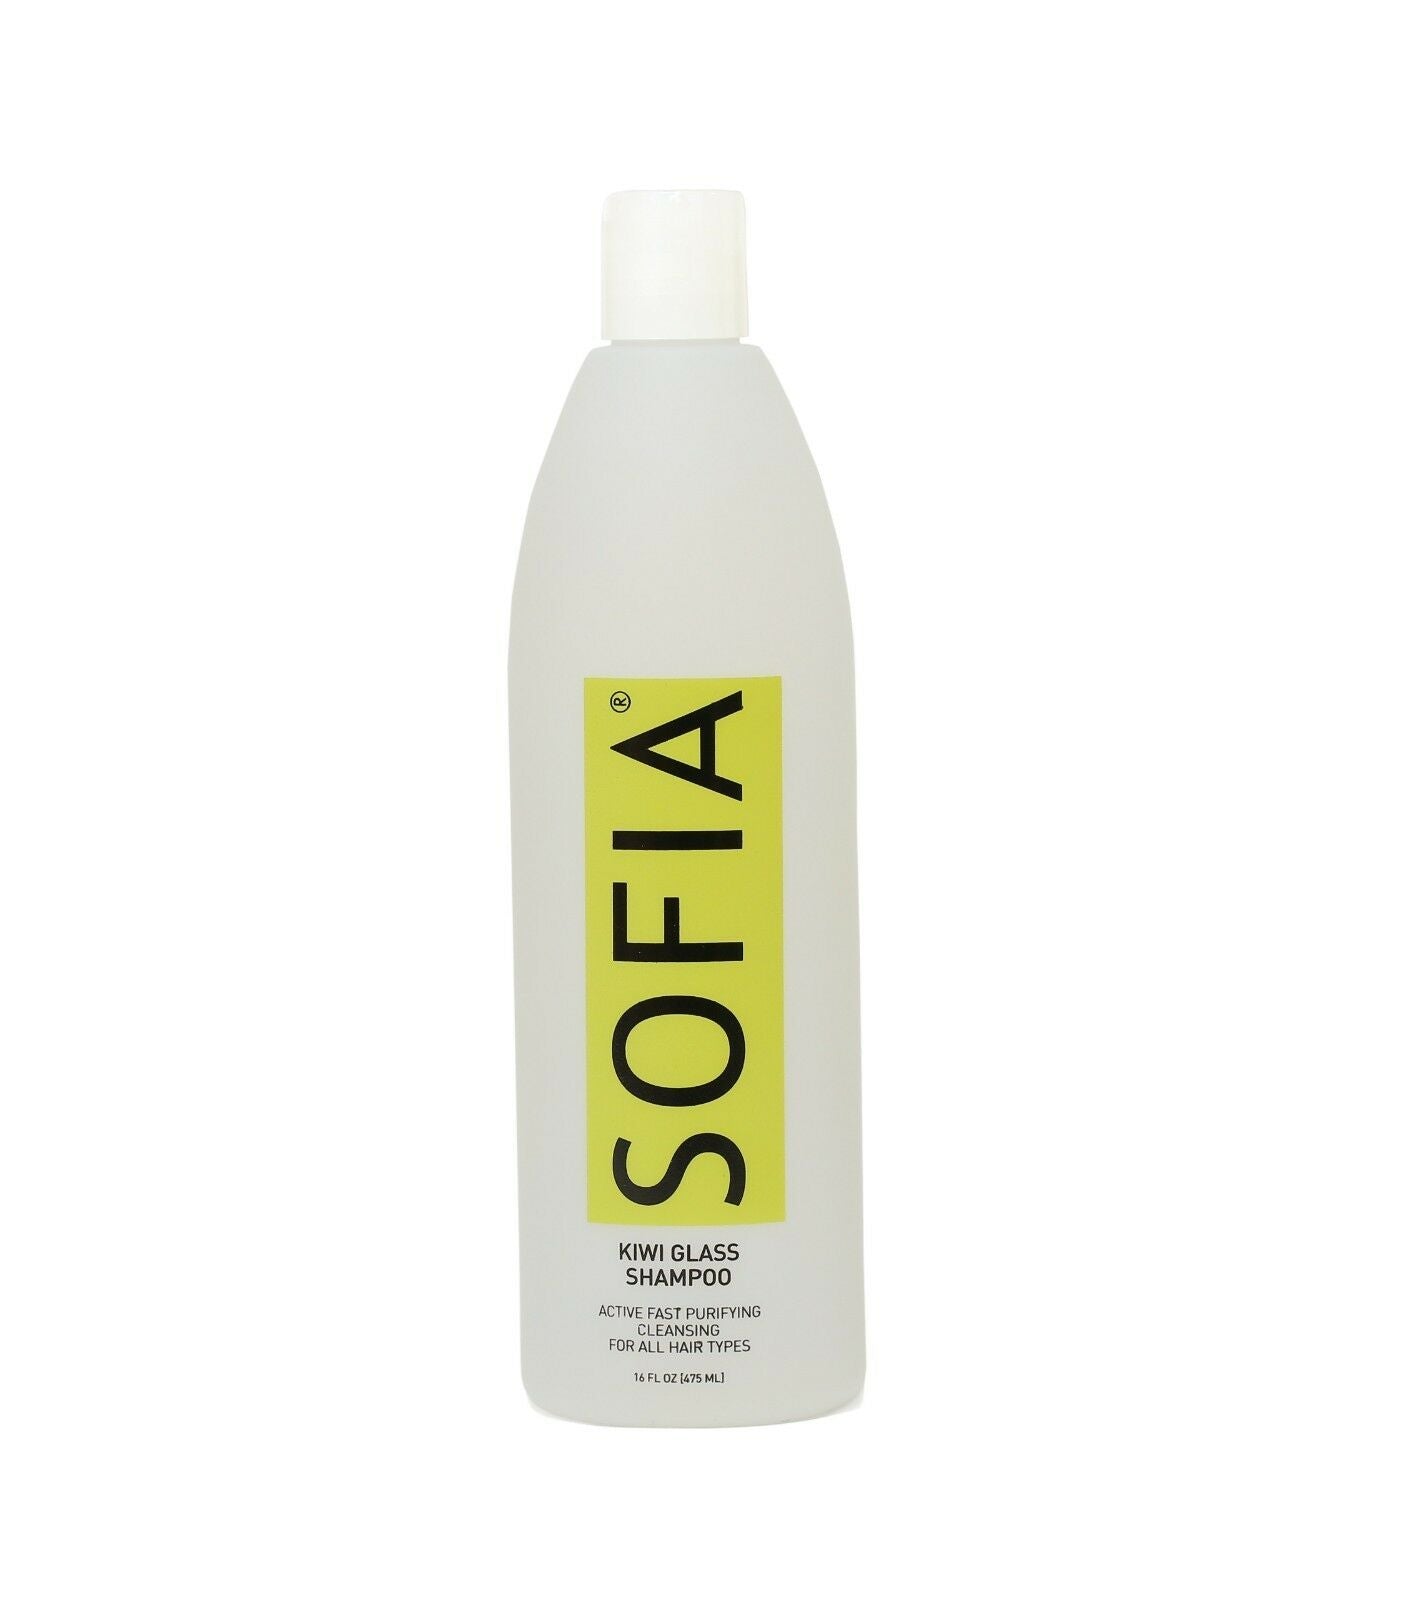 SOFIA Kiwi Glass Purifying Shampoo- 16 FL OZ- Paraben Free- Made in USA